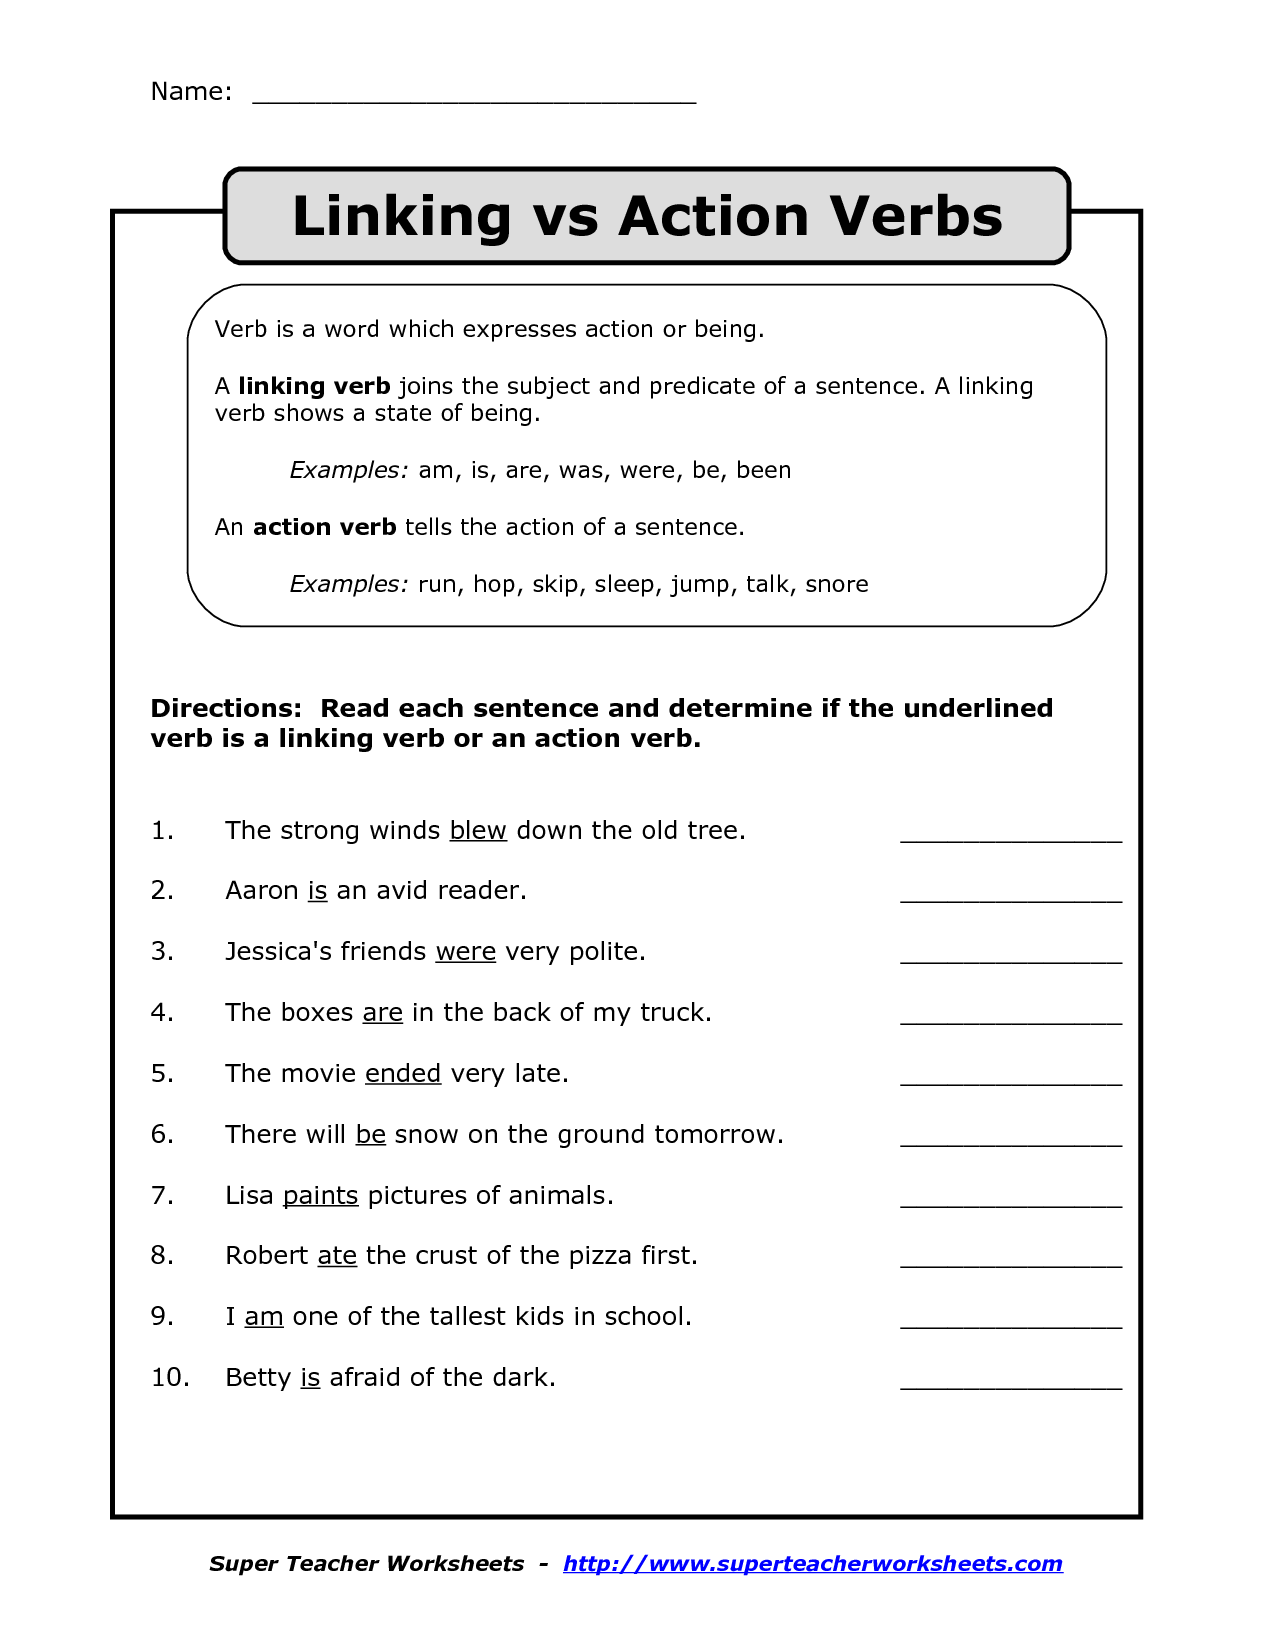 helping-verbs-worksheet-5th-grade